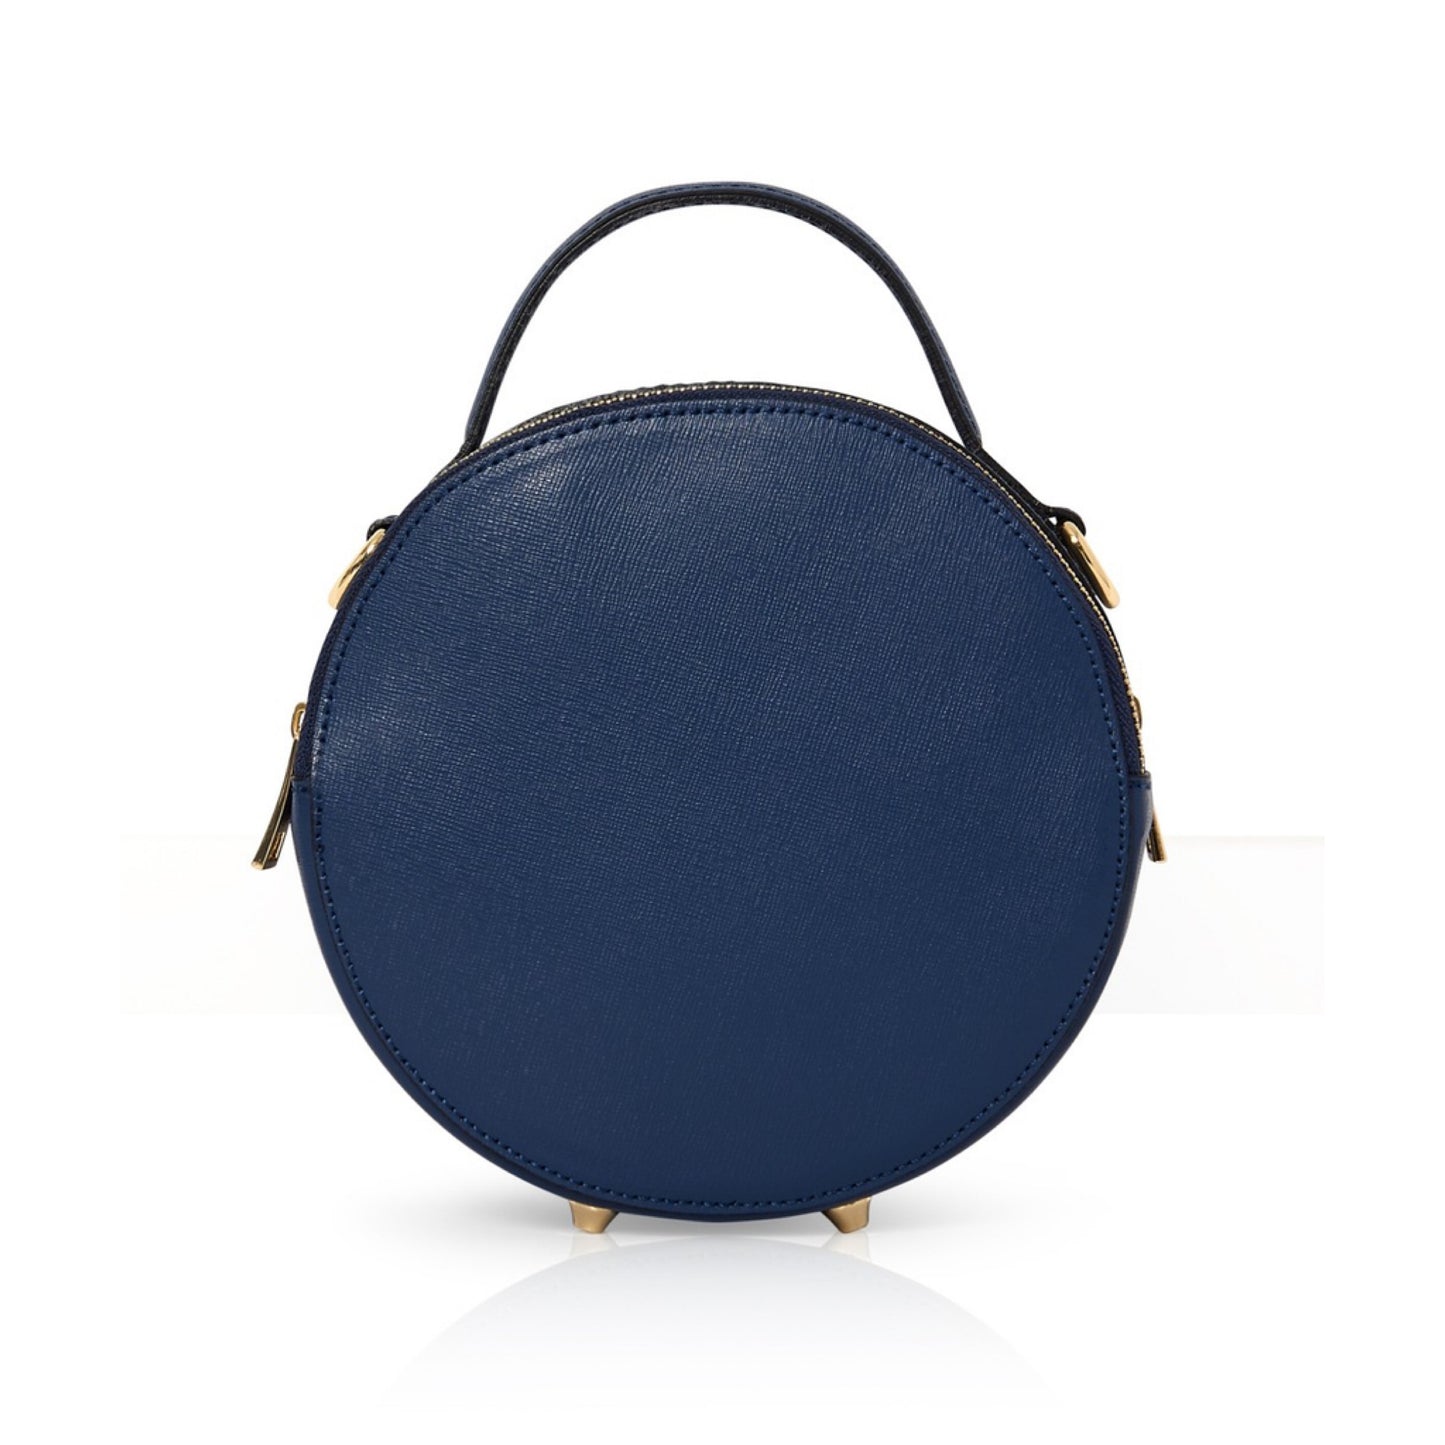 Luna - round leather grab bag